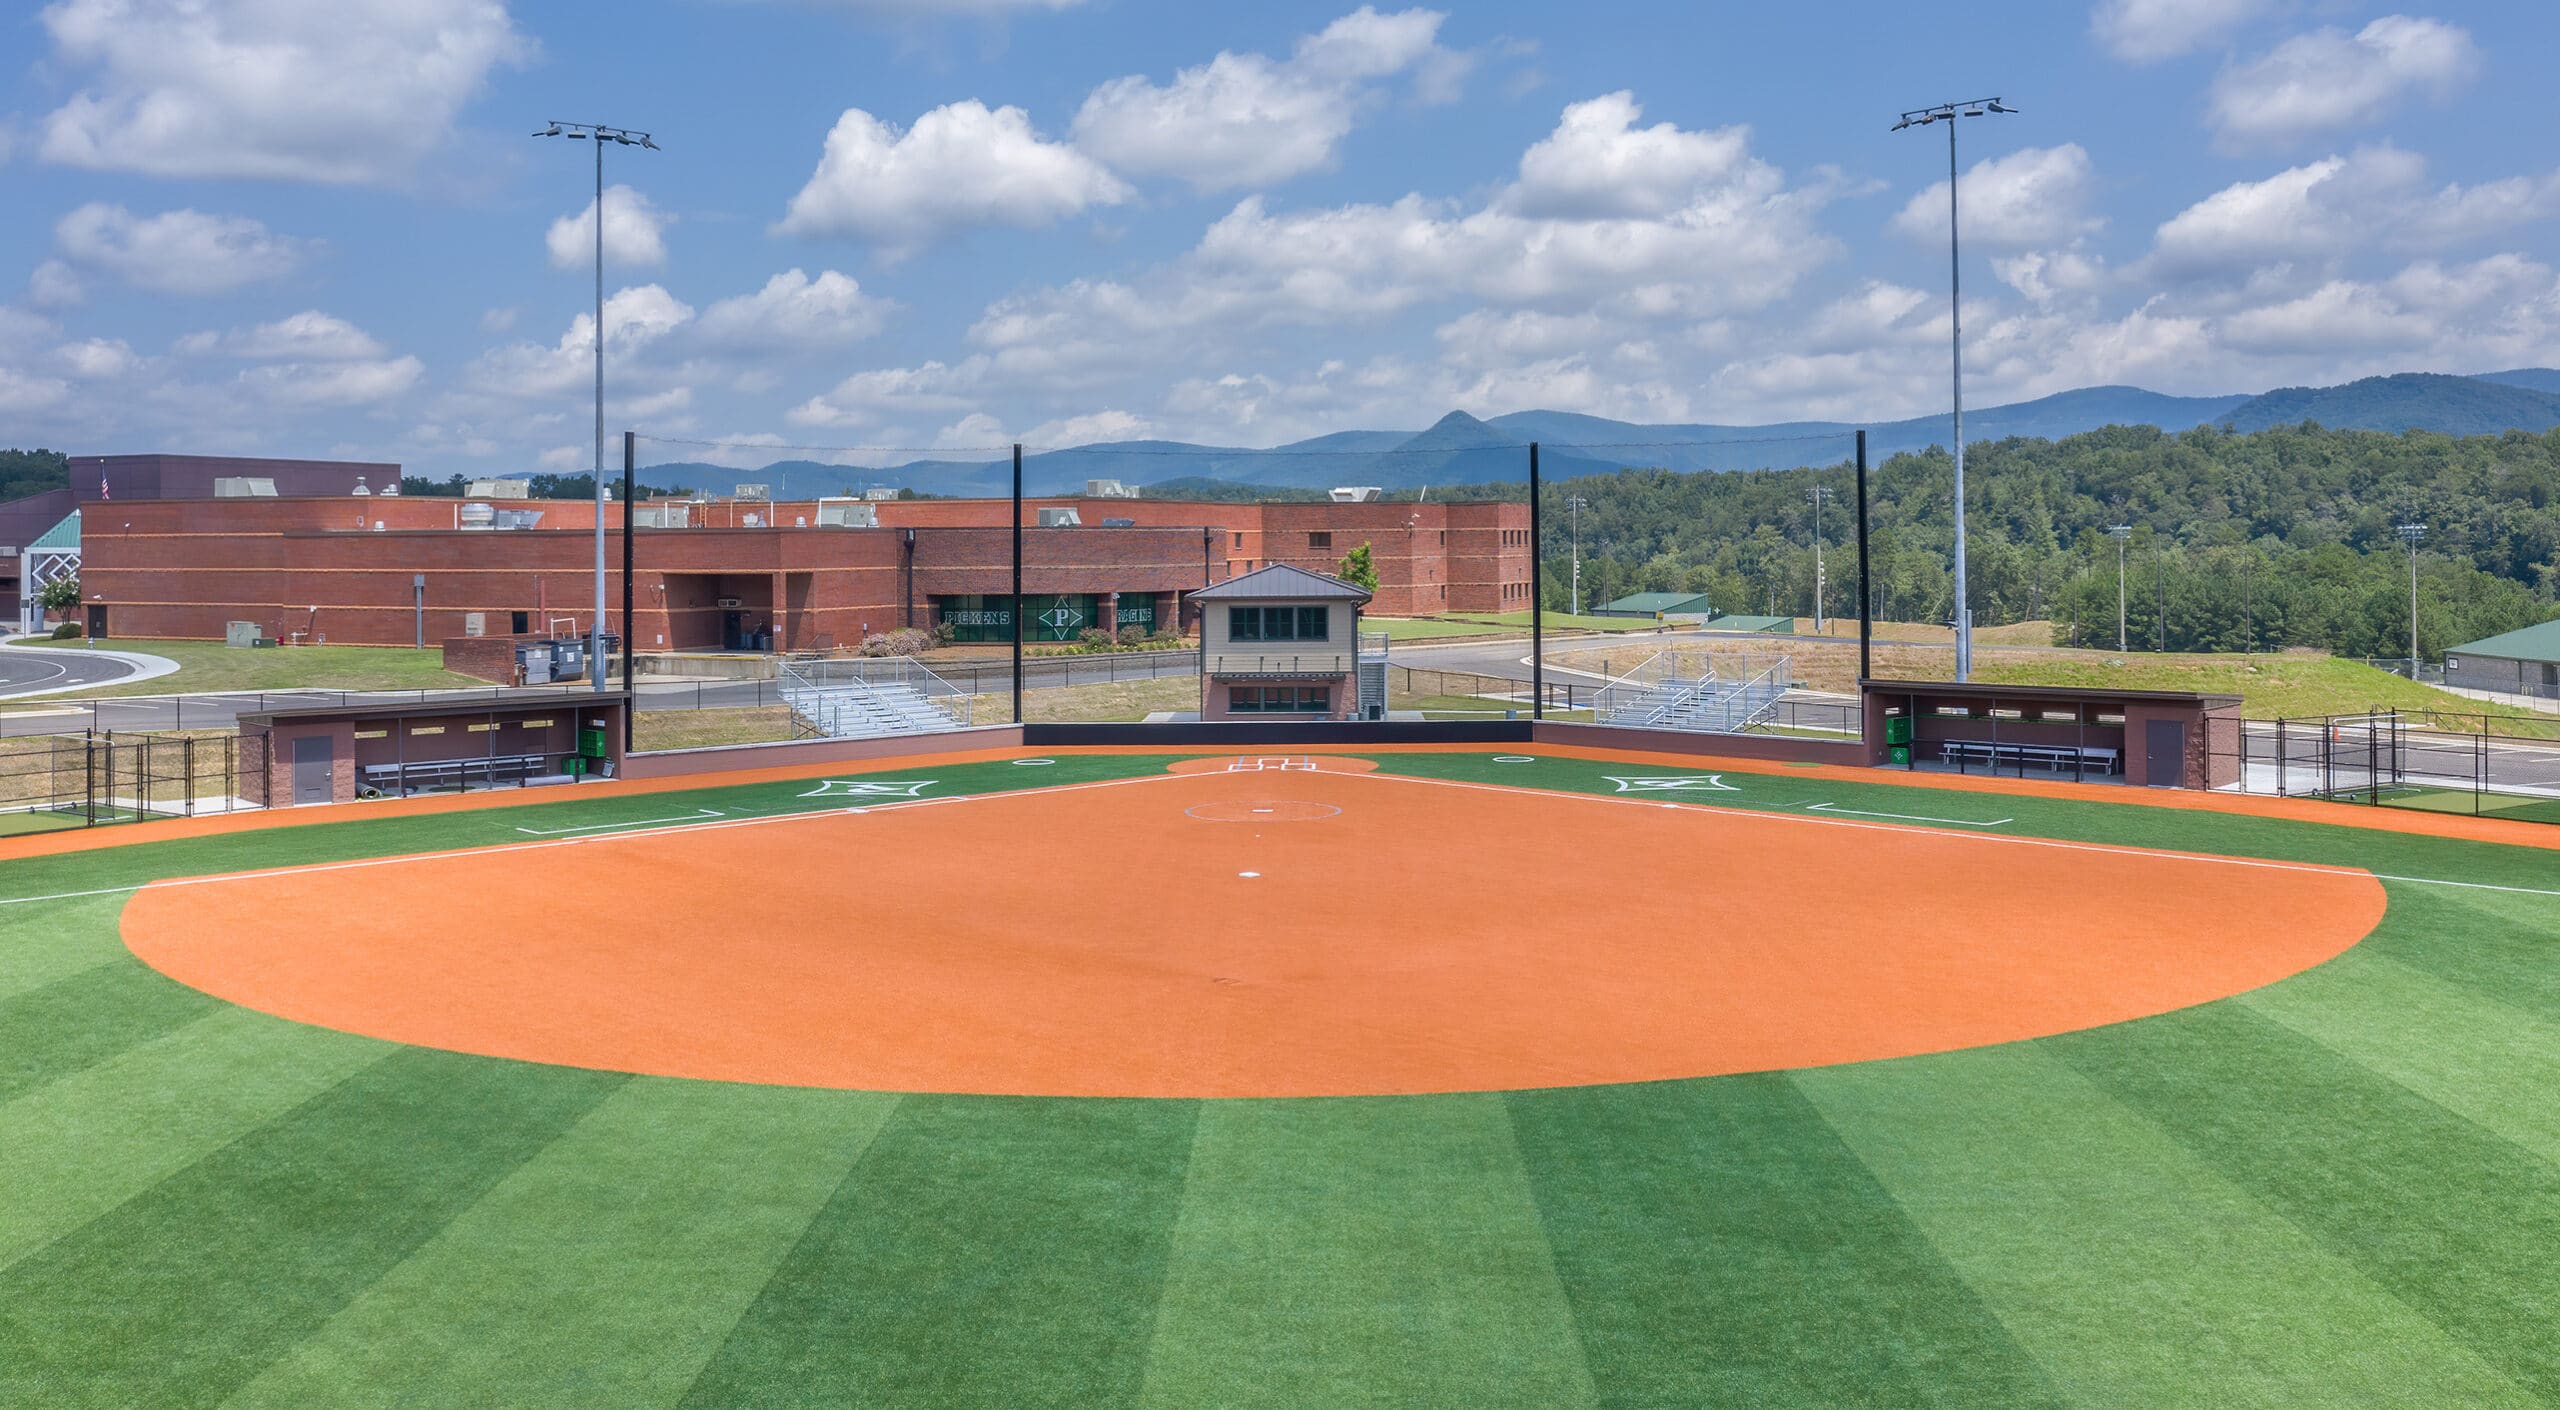 pickens county high school's baseball field